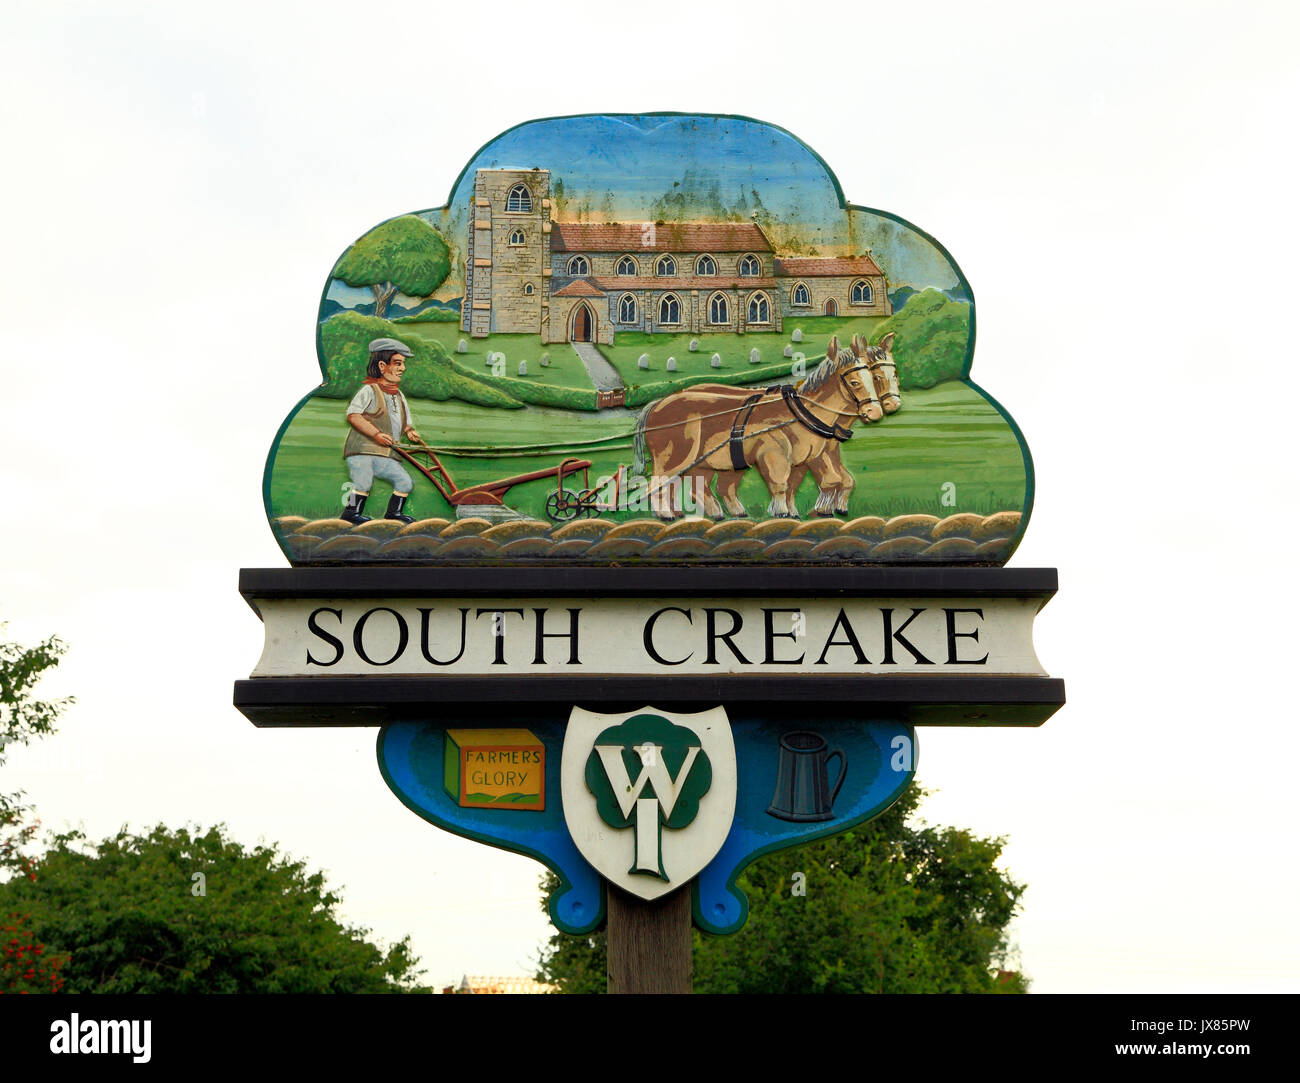 South Creake, village sign, Norfolk, England, UK, English village signs, W.I. Women's Institute Stock Photo